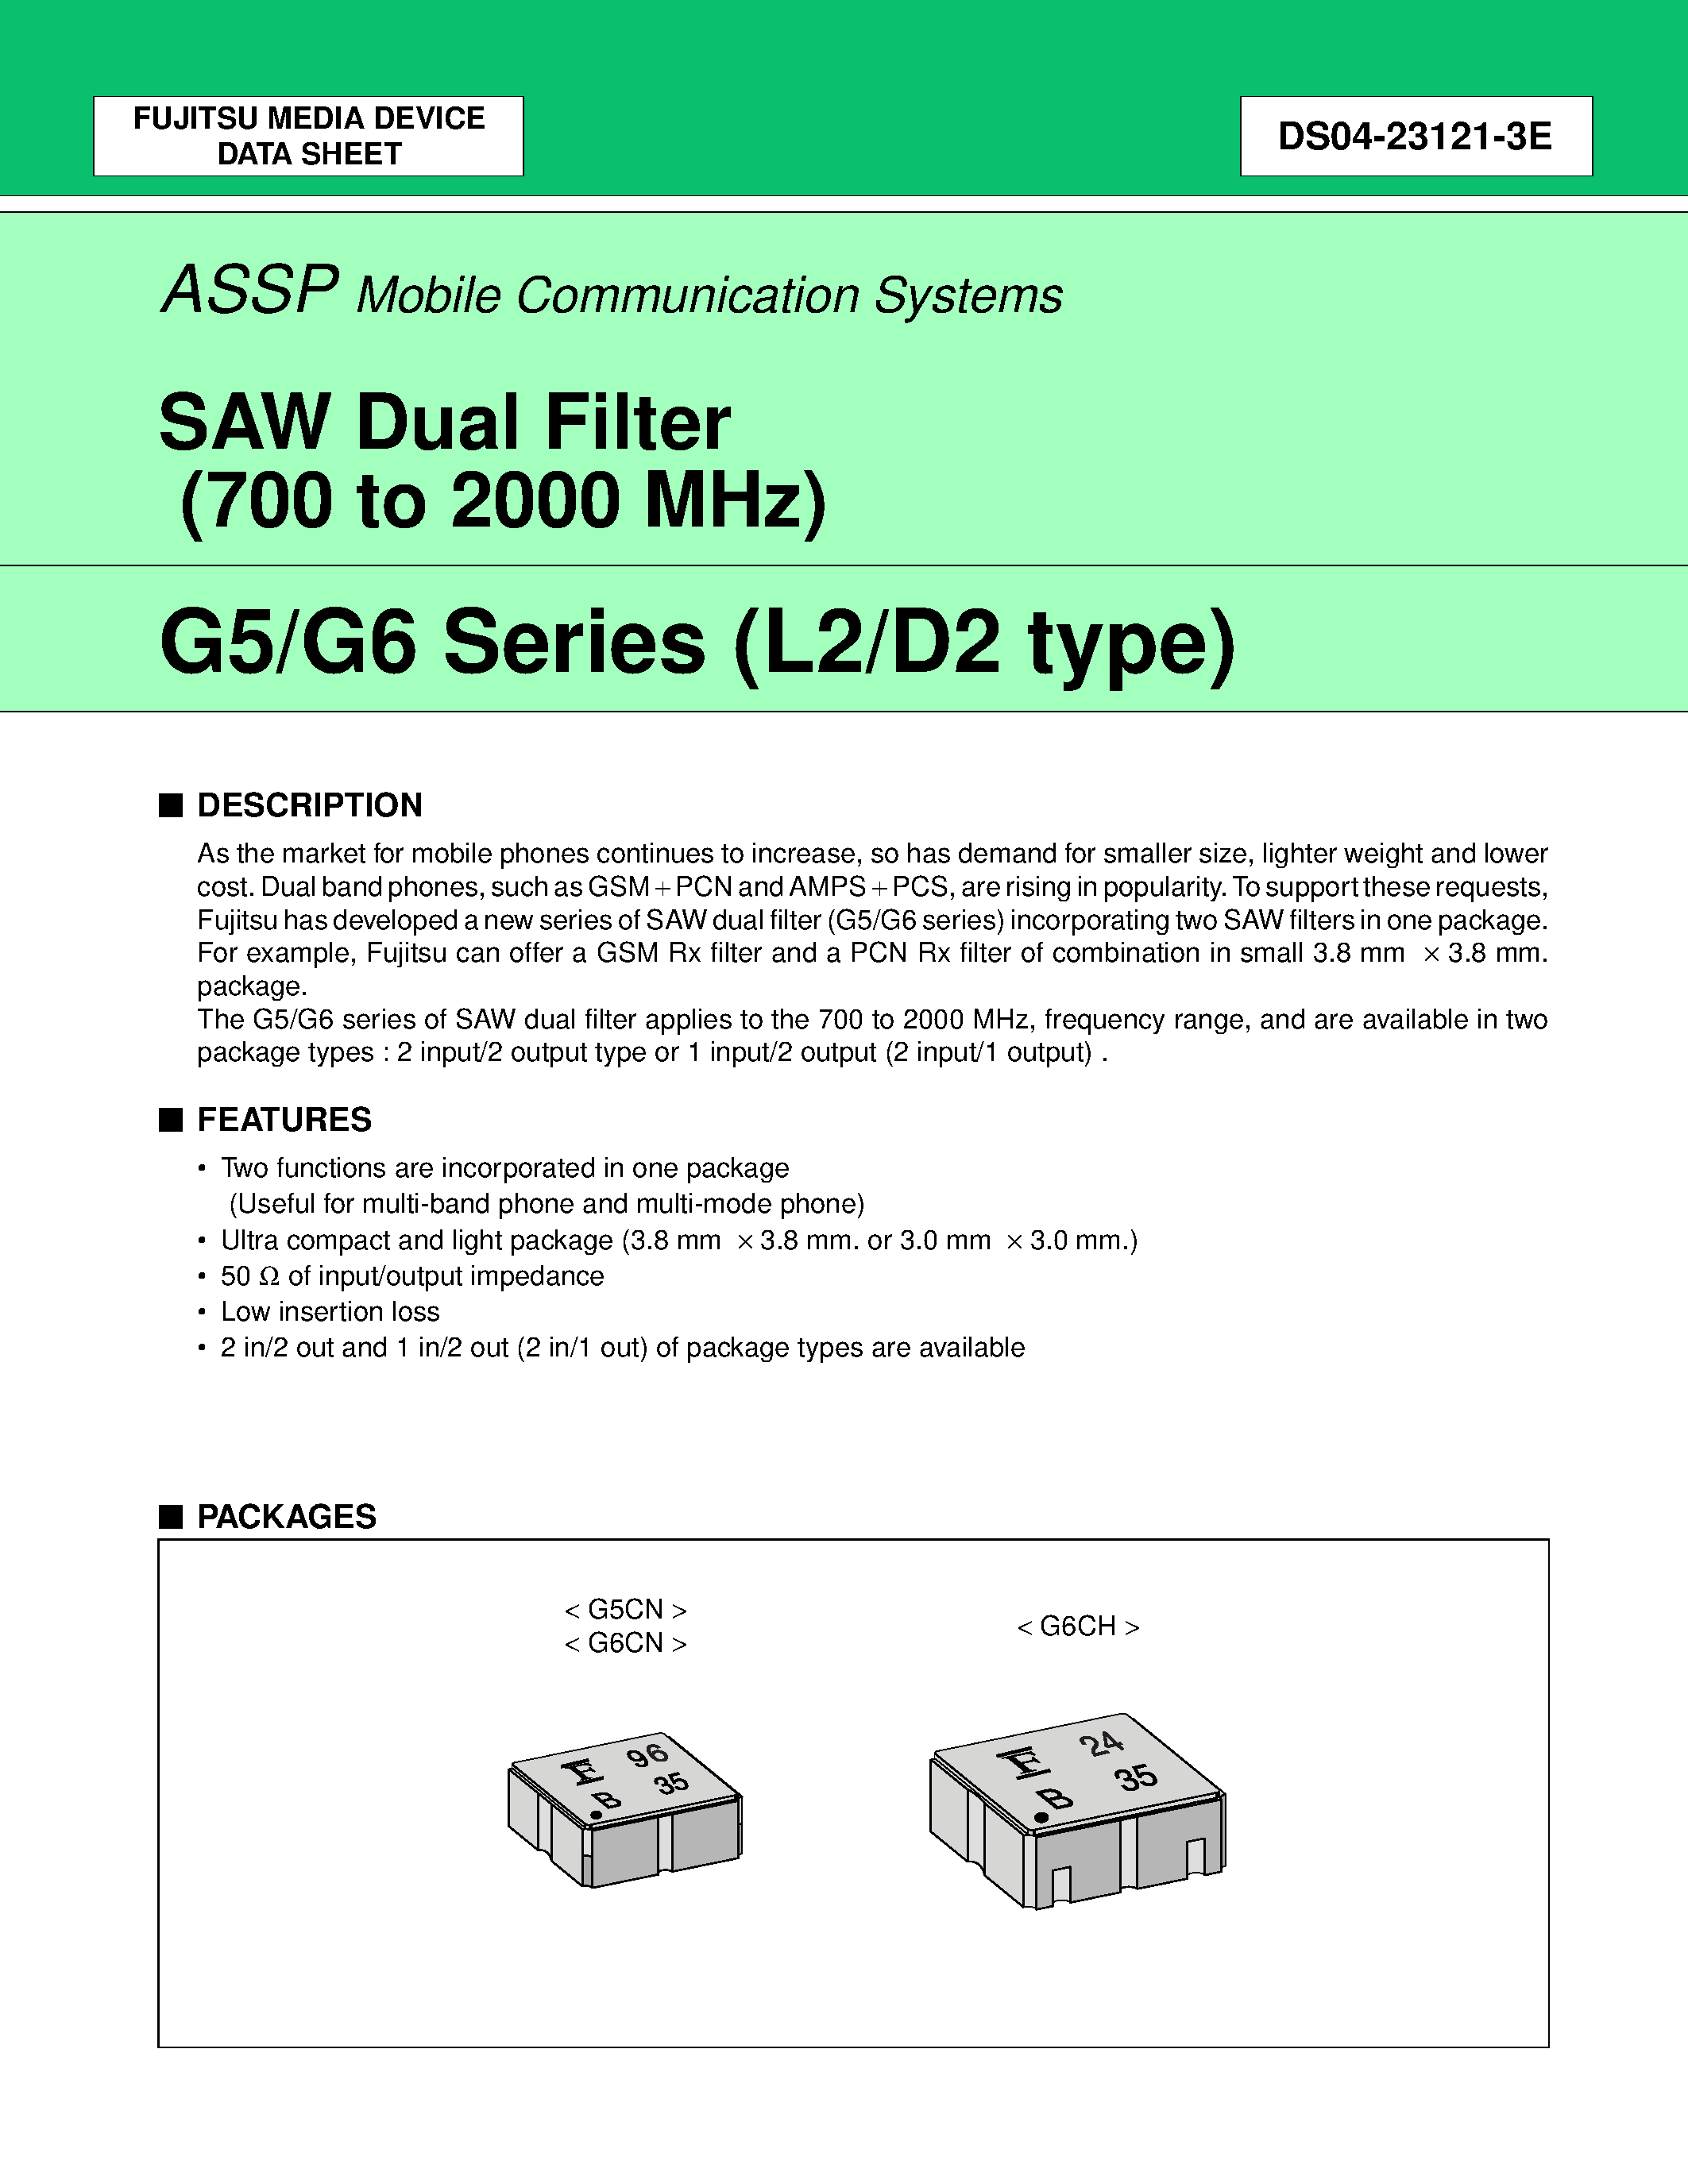 Даташит FAR-G5CN-877M50-D292-V - SAW Dual Filter (700 to 2000 MHz) страница 1